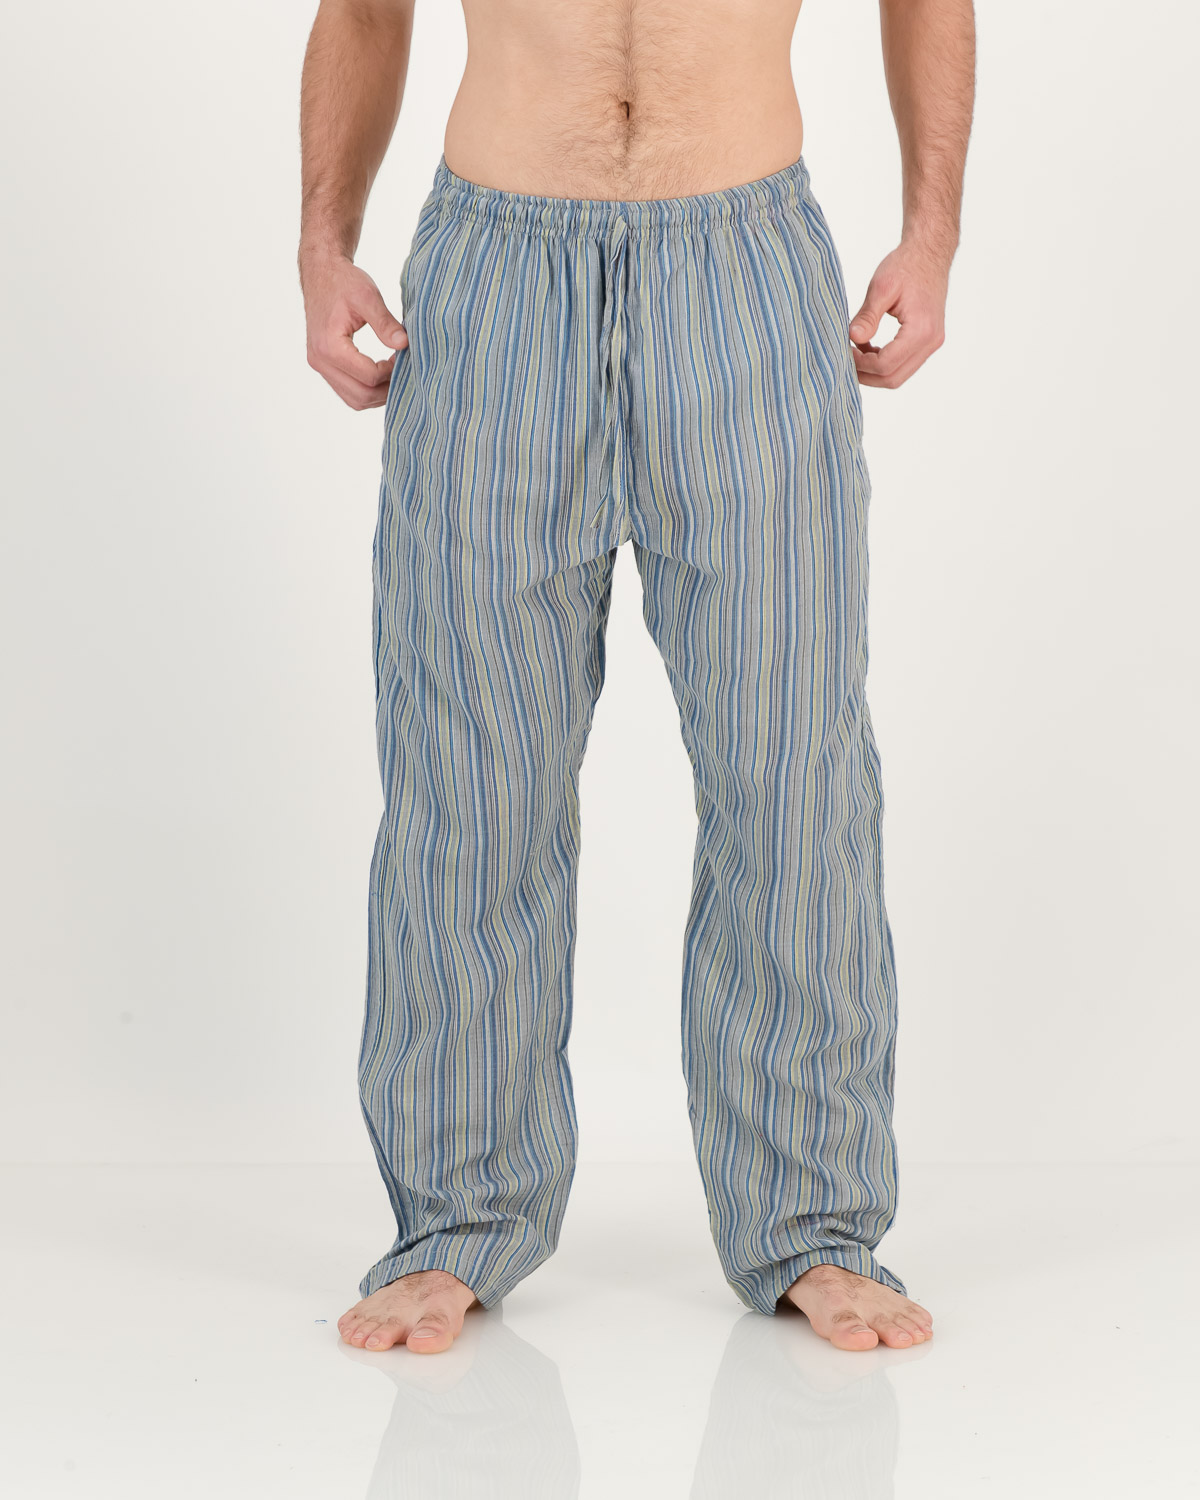 SKA Nepalese Vertical Striped PE Pants Trousers- Grey Blue